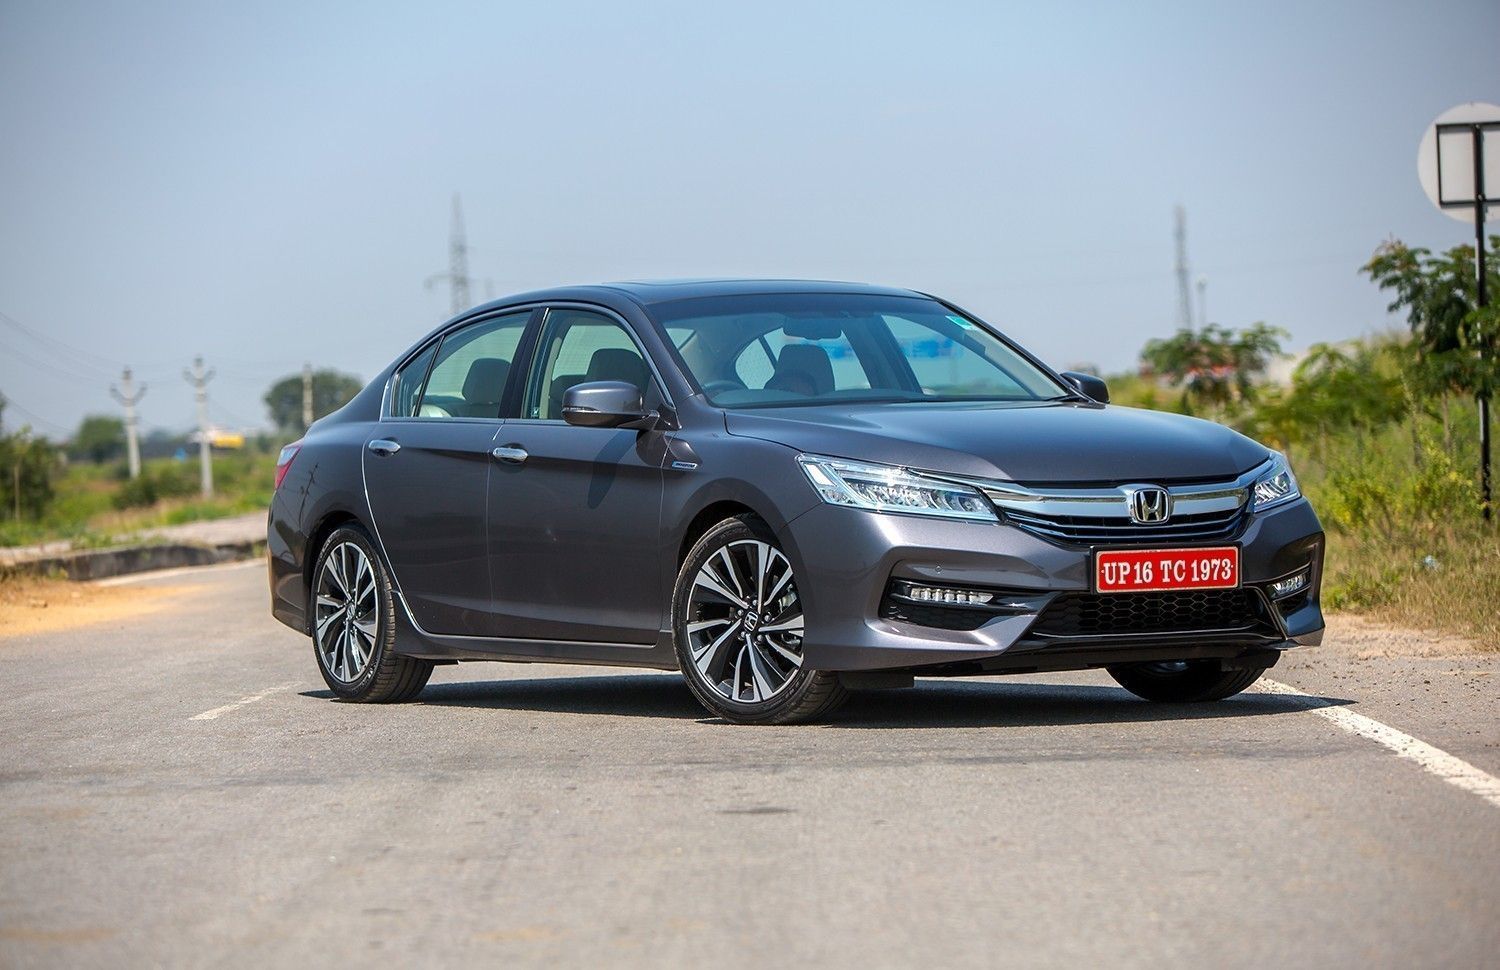 Honda Accord Hybrid: First Drive Review